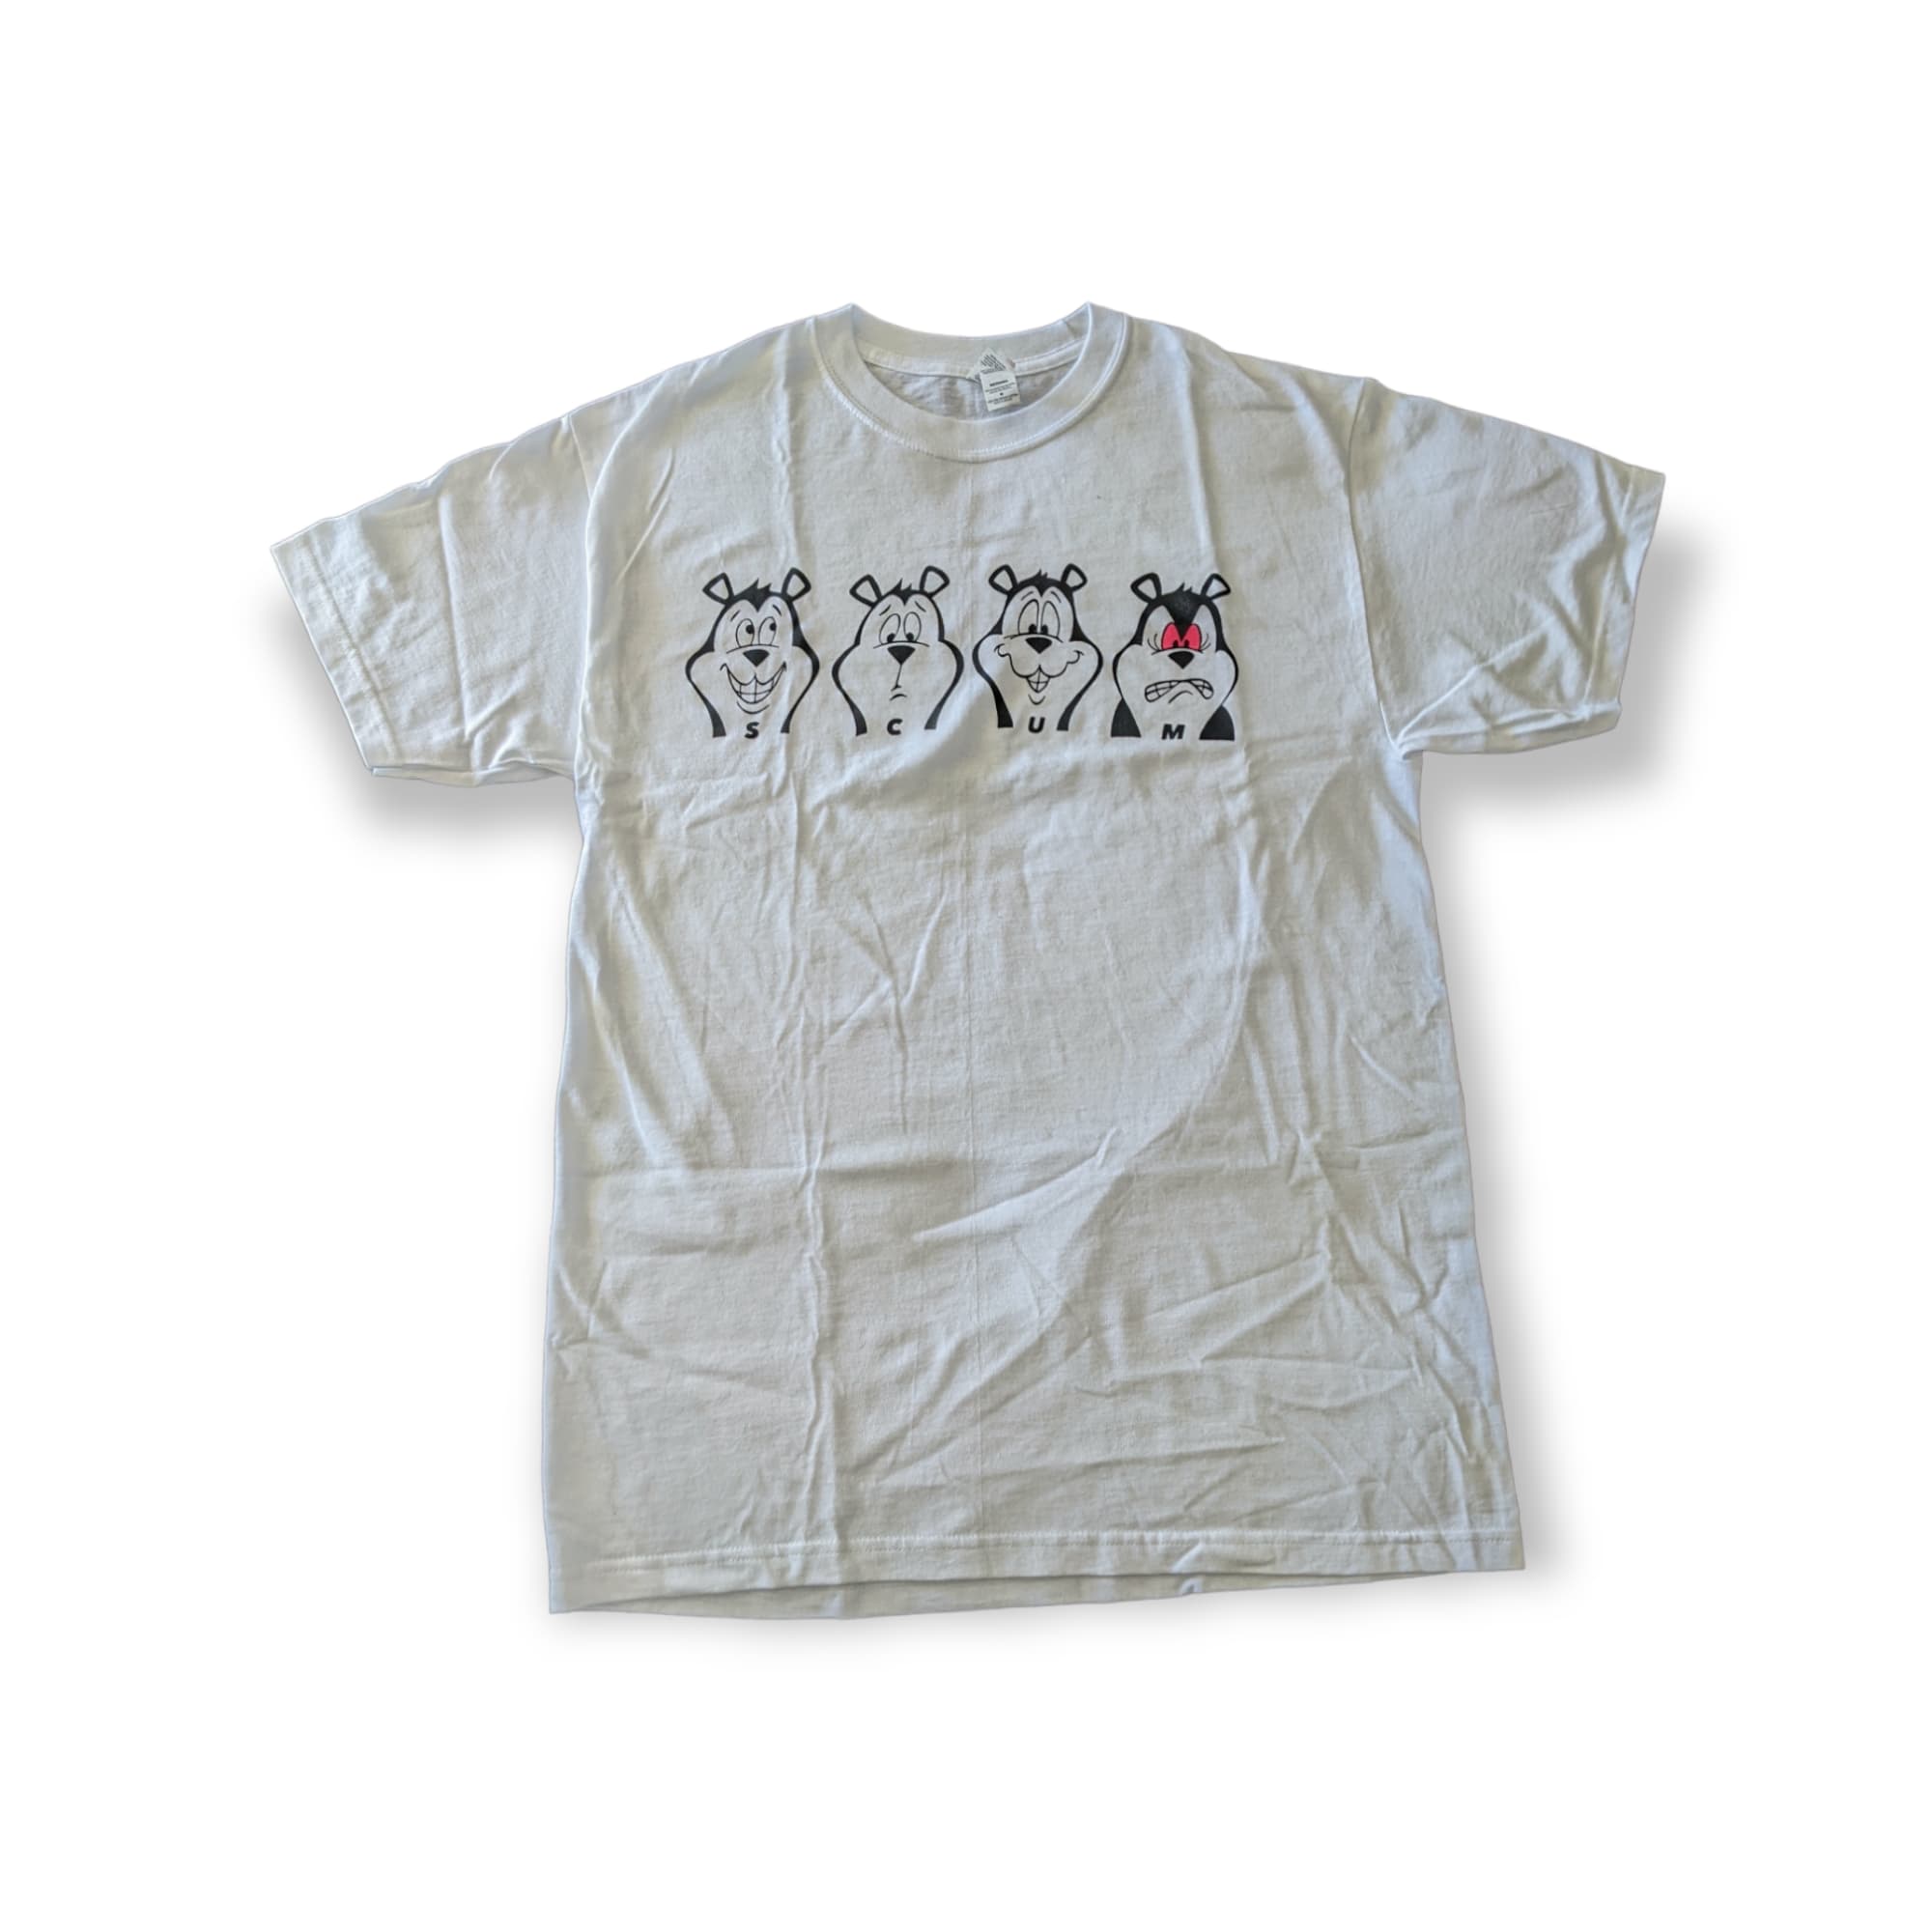 Scum Skates – Bears T-Shirt XL and Med